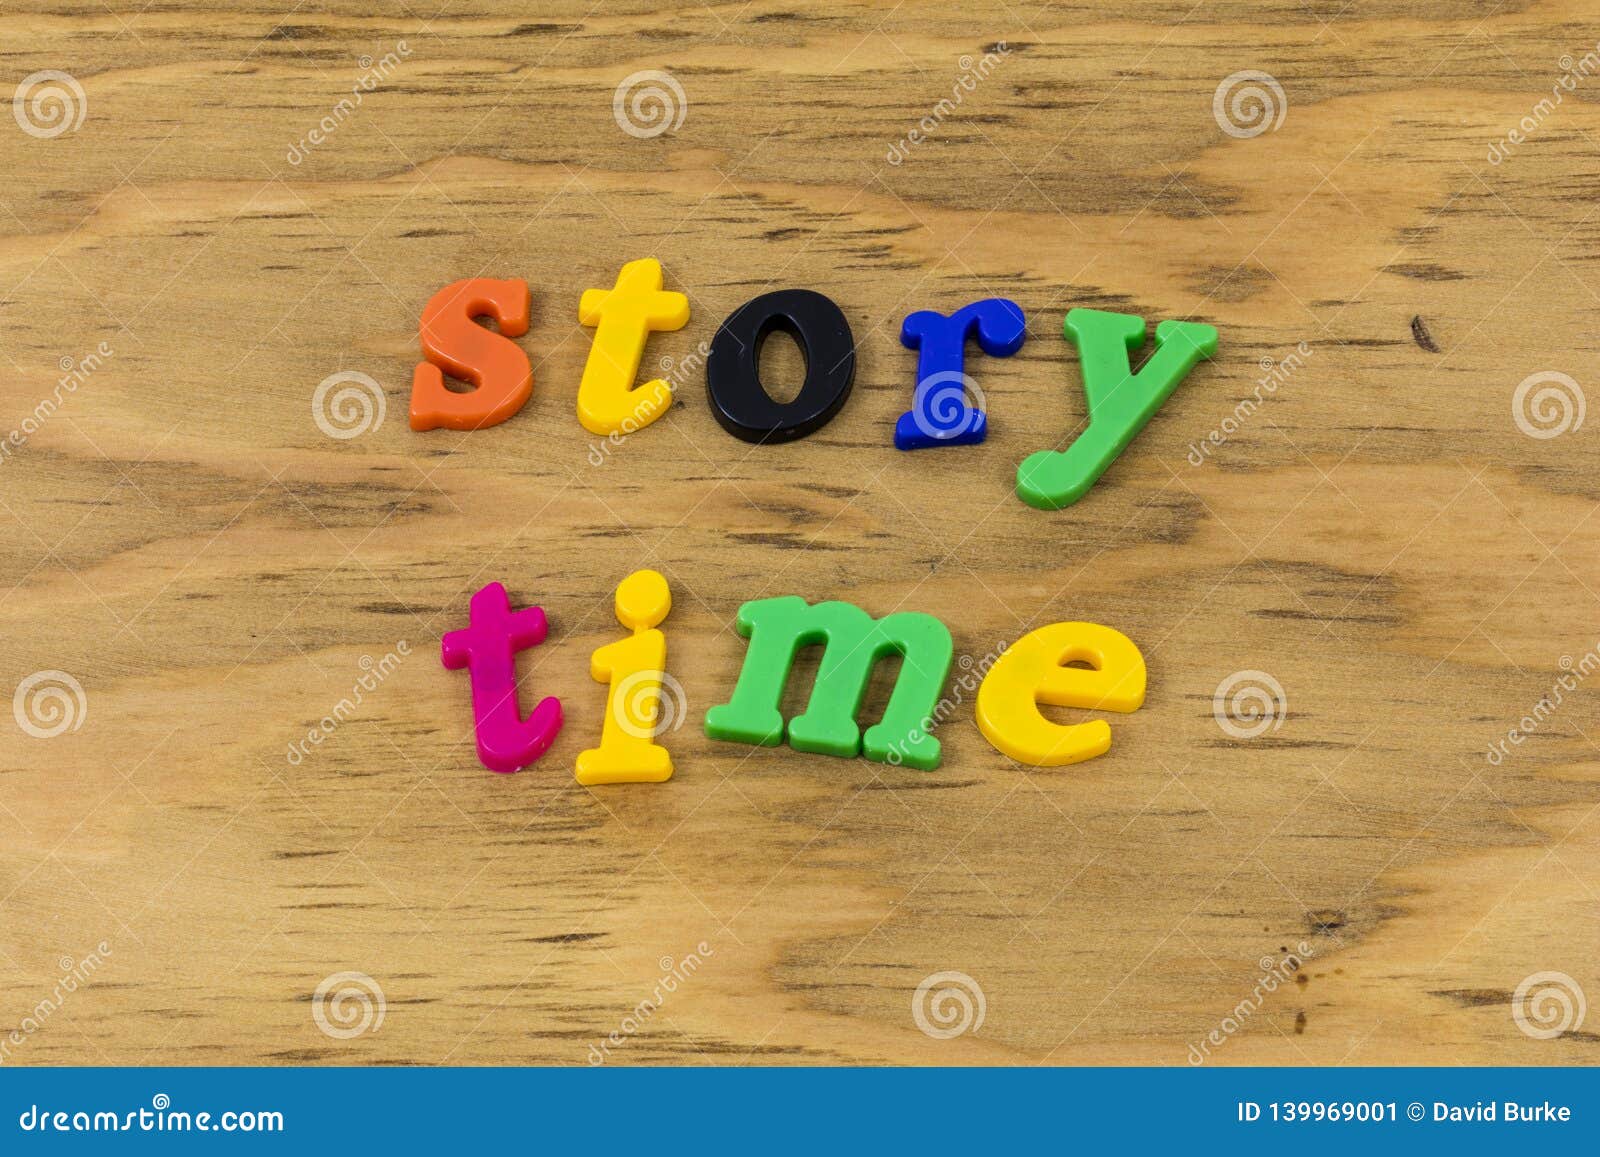 story time reading telling classroom fun storytelling storyteller